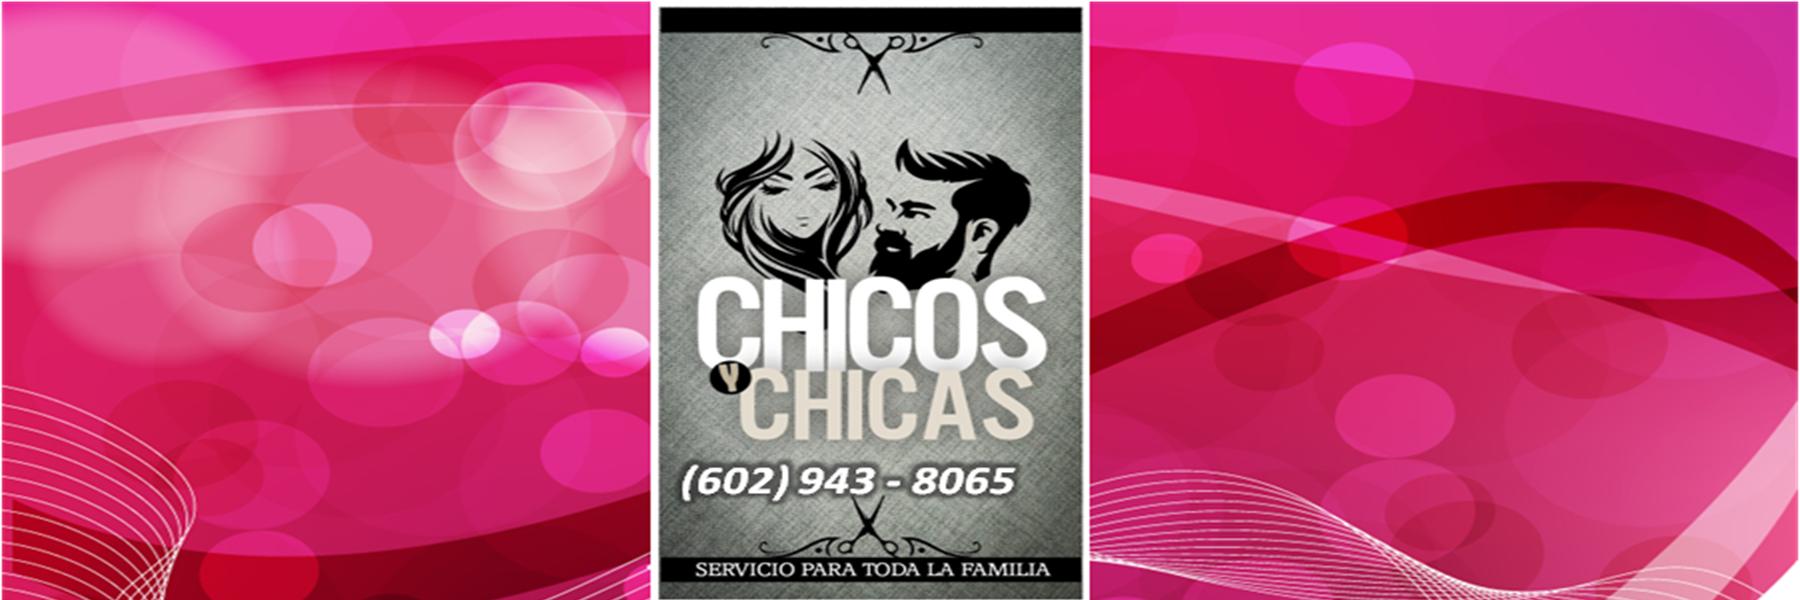 Chicos & Chicas Beauty Salon